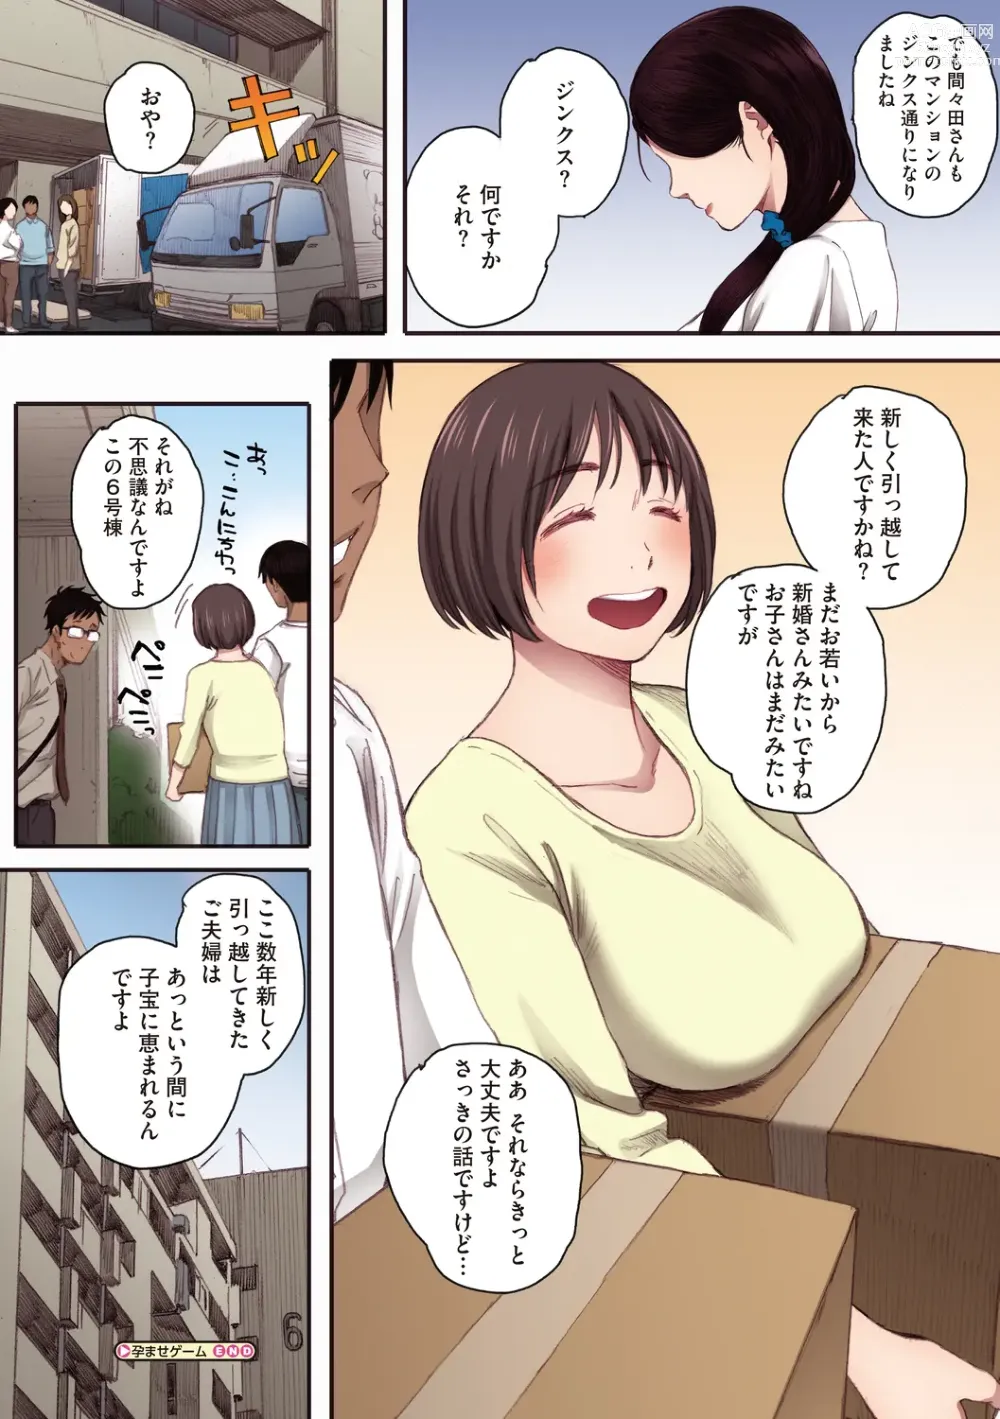 Page 216 of manga Futei no Karada - Unfaithful Body